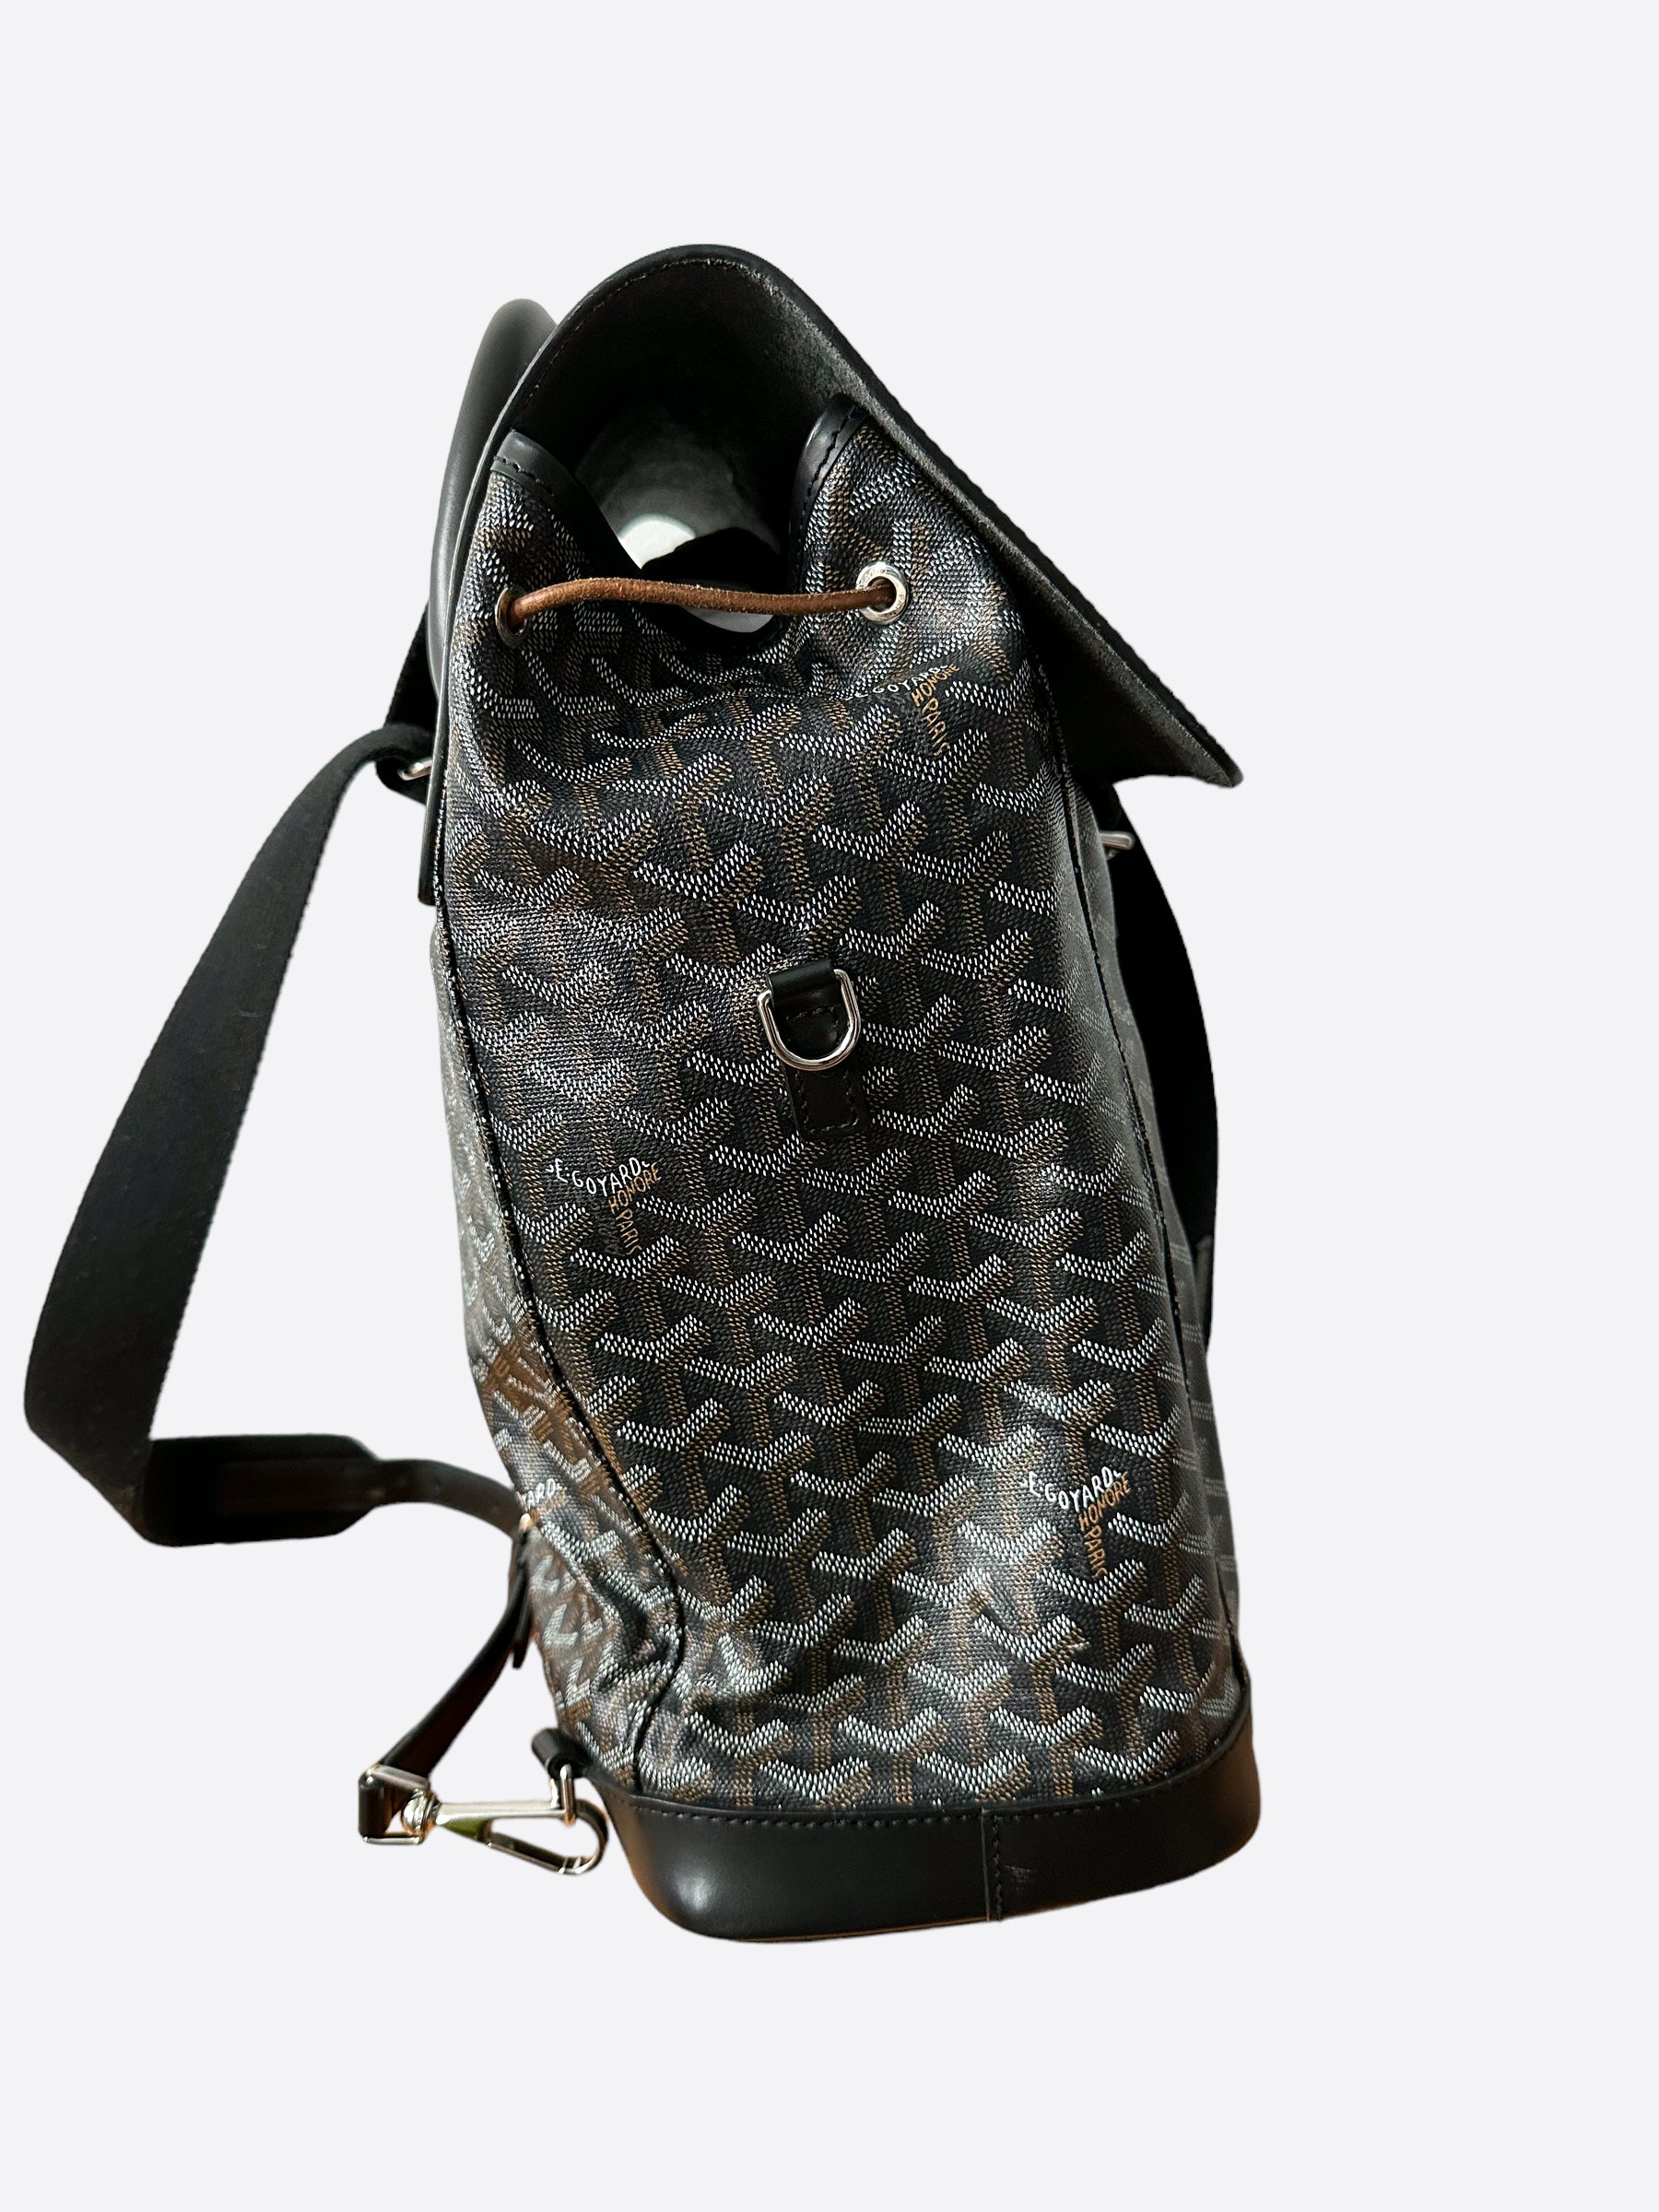 Goyard Alpin - For Sale on 1stDibs  goyard alpin backpack price, goyard  backpack, goyard alpin price